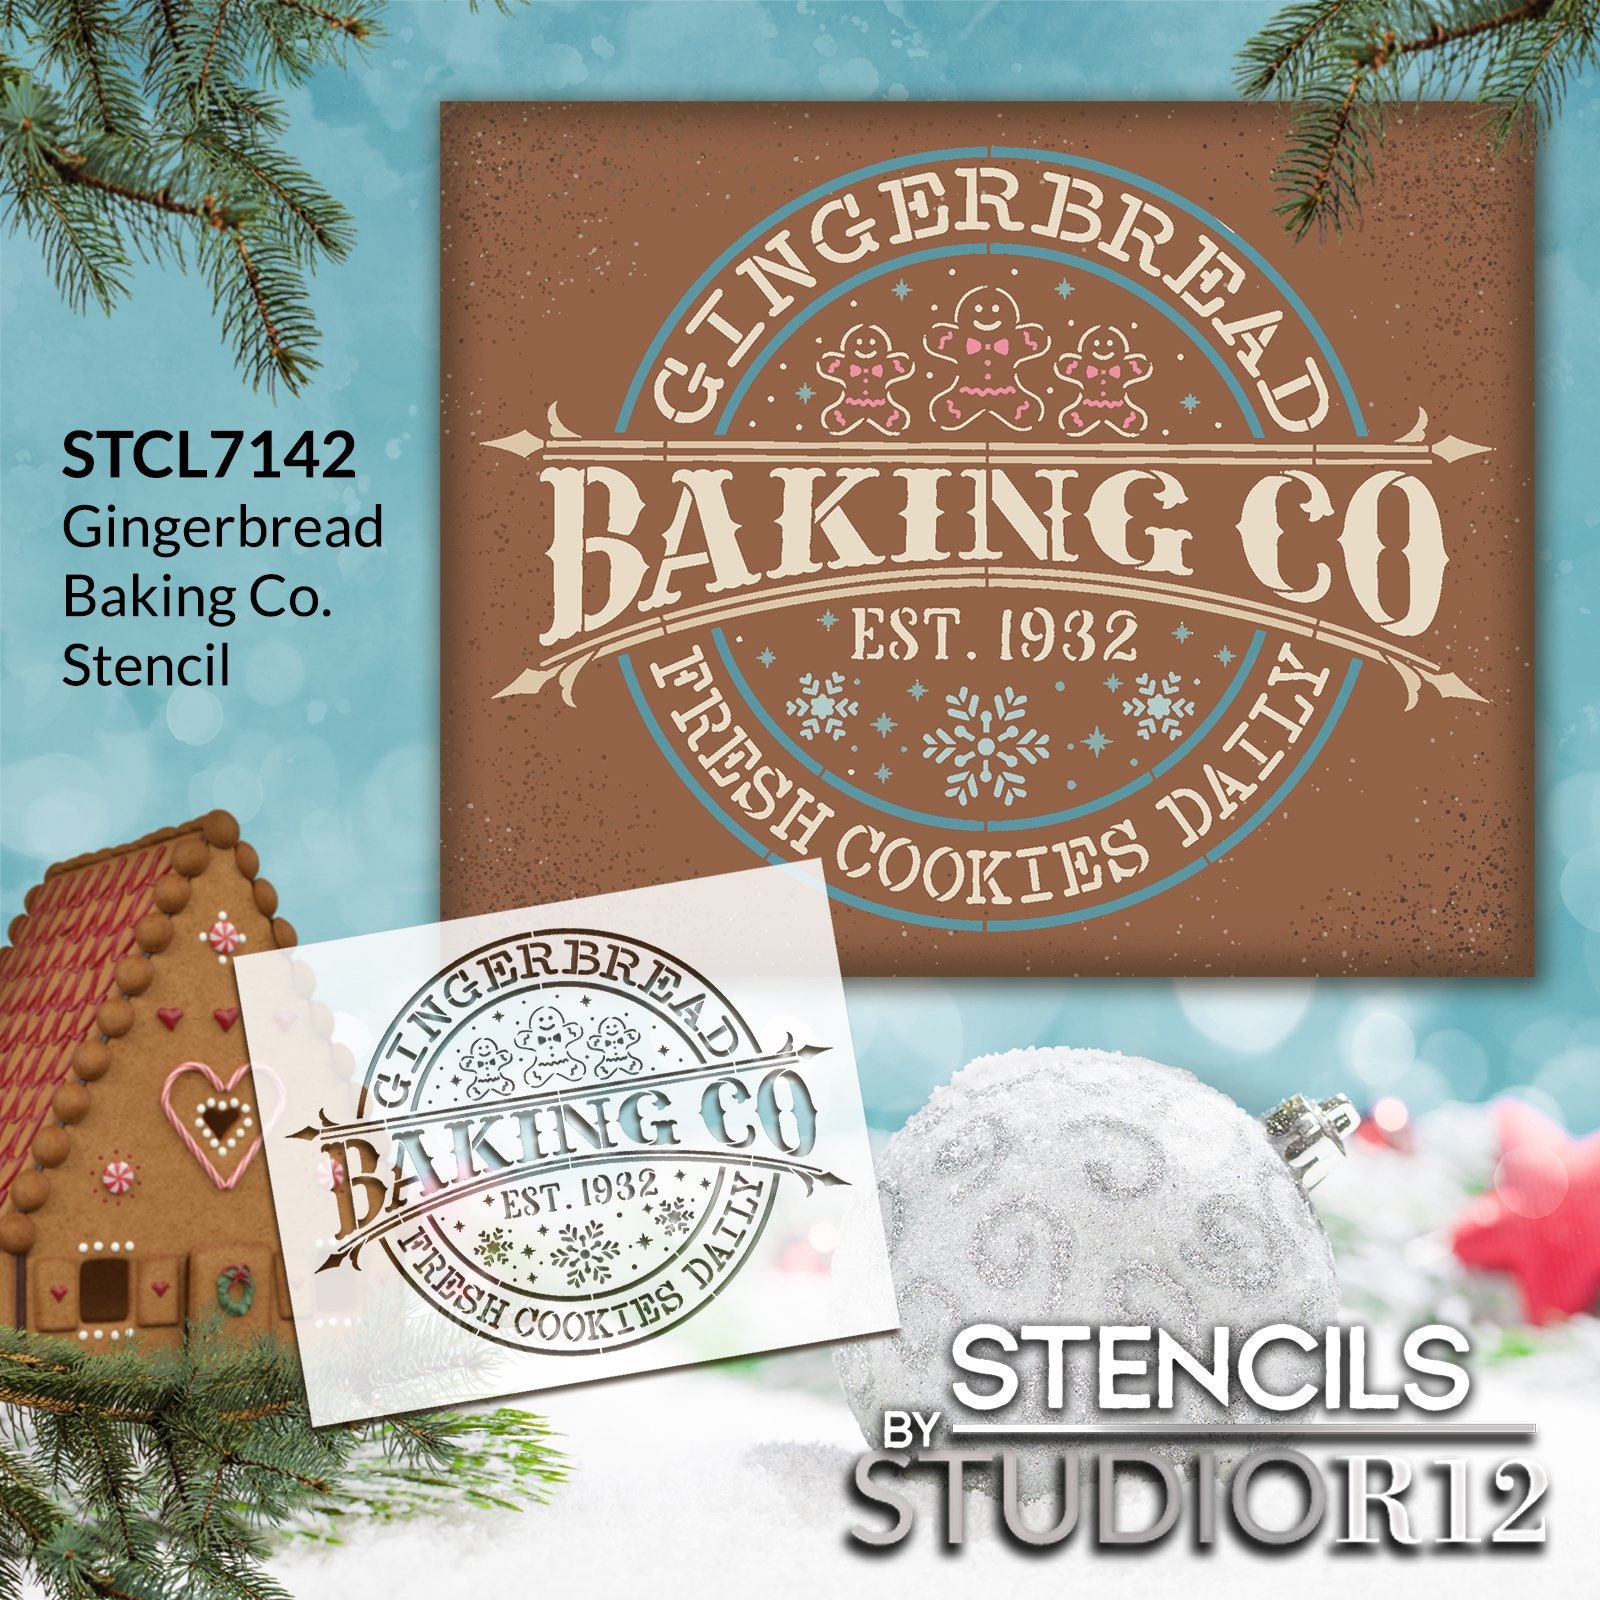 Stencil Designer Brand 1 – Bakers Boutique